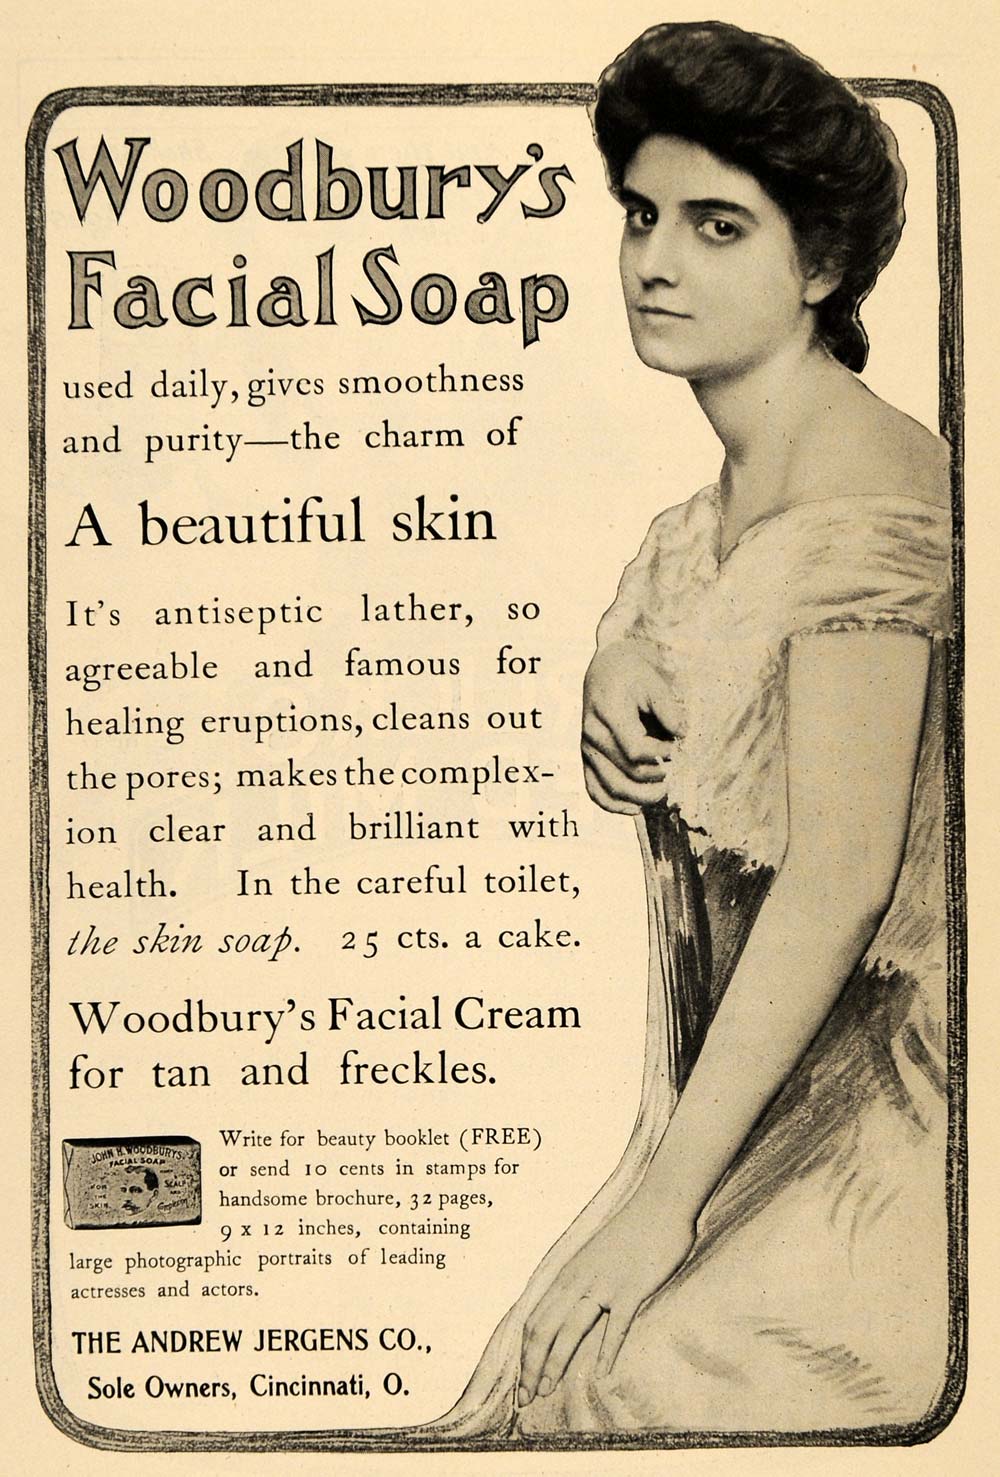 1904 Ad Andrew Jergens Company Woodbury's Facial Soap - ORIGINAL TOM3